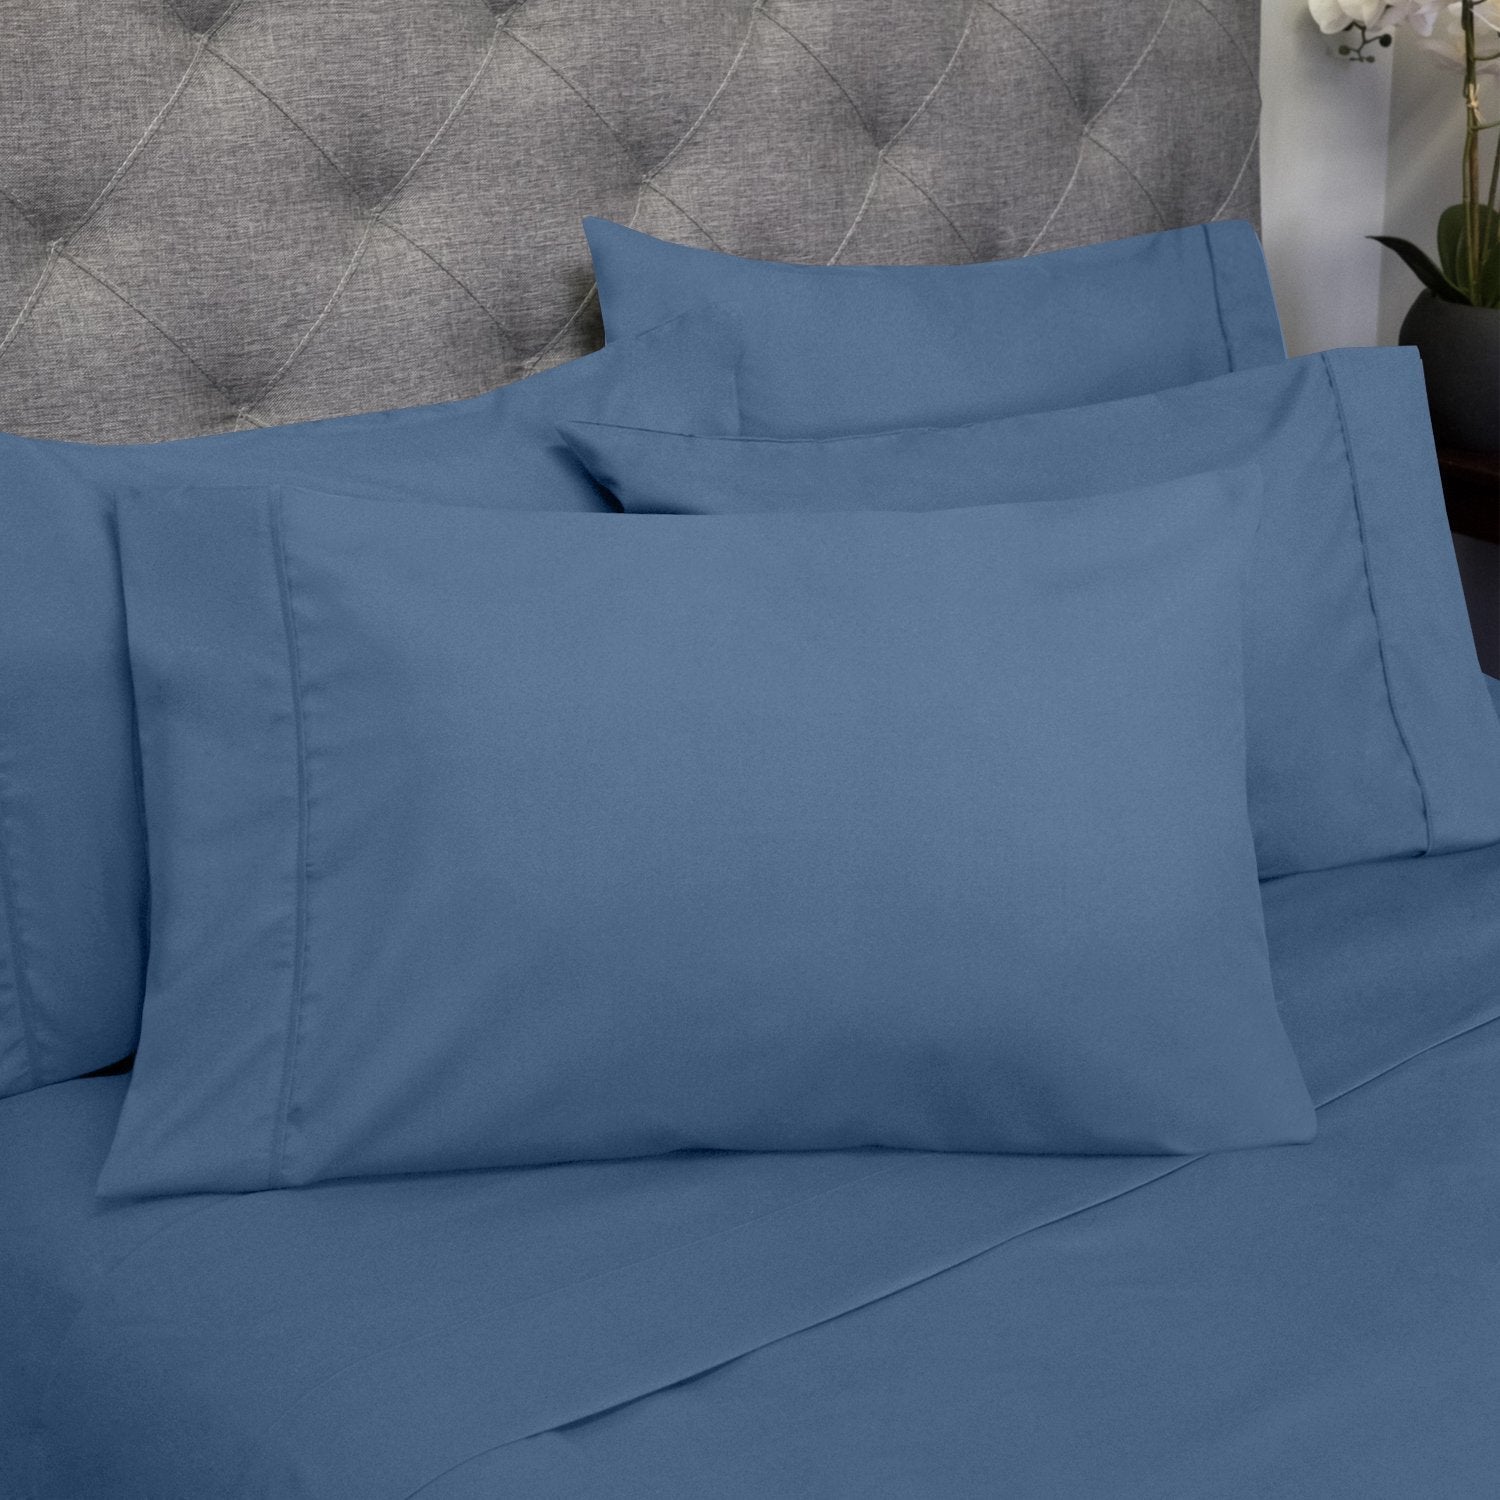 Deluxe 6-Piece Bed Sheet Set (Denim) - Pillowcases